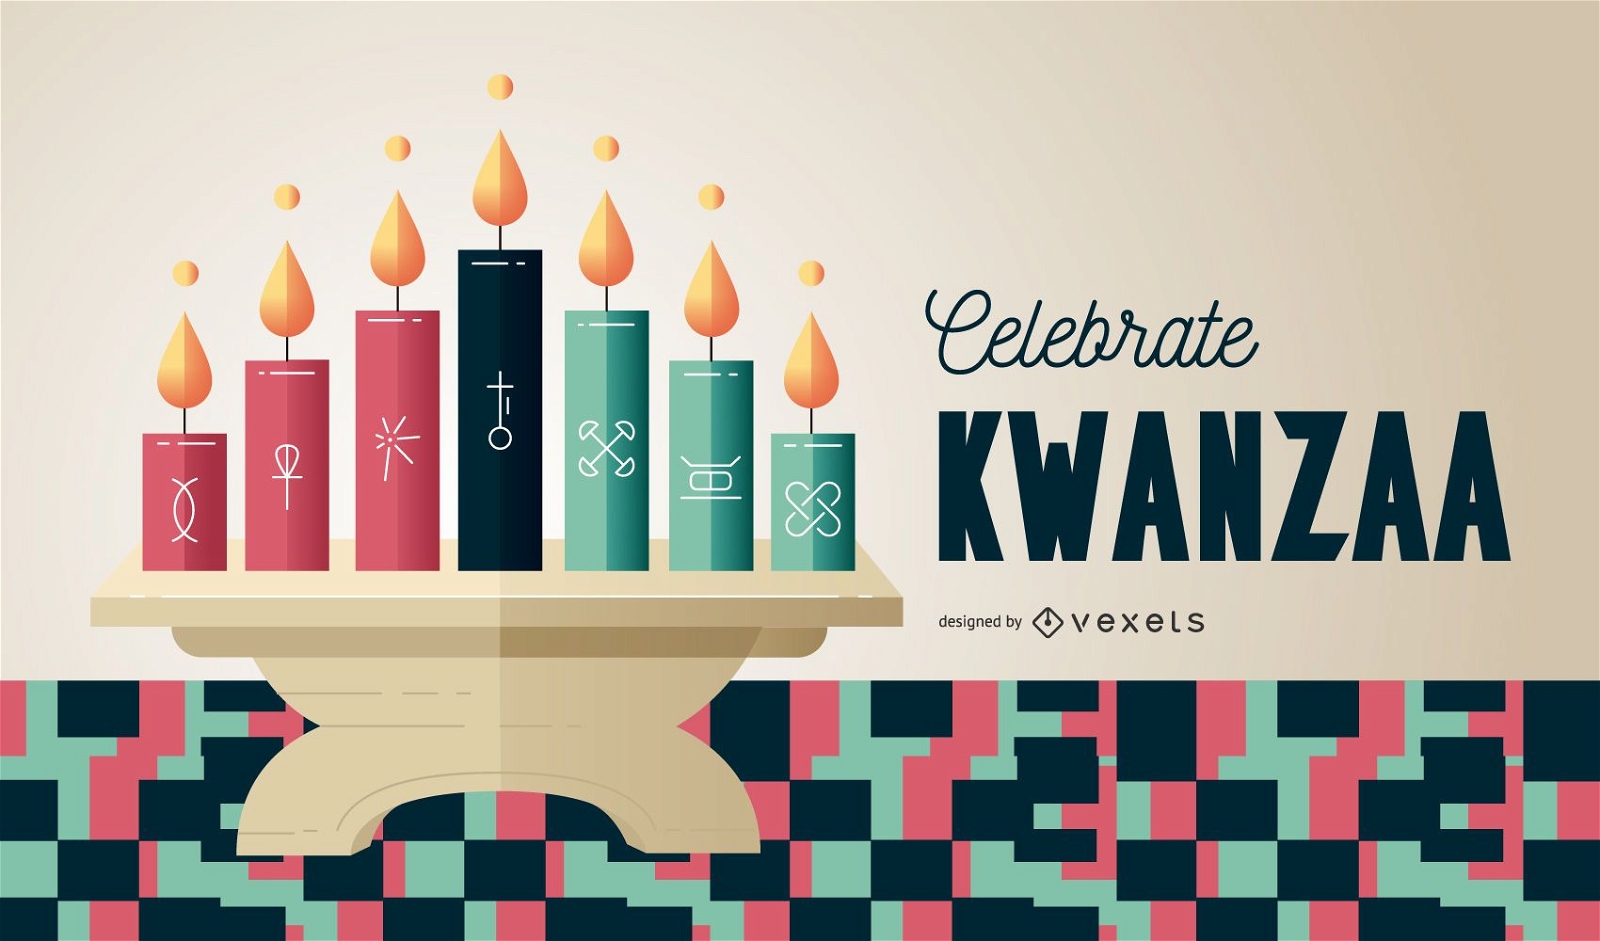 Celebrate Kwanzaa kinara illustration